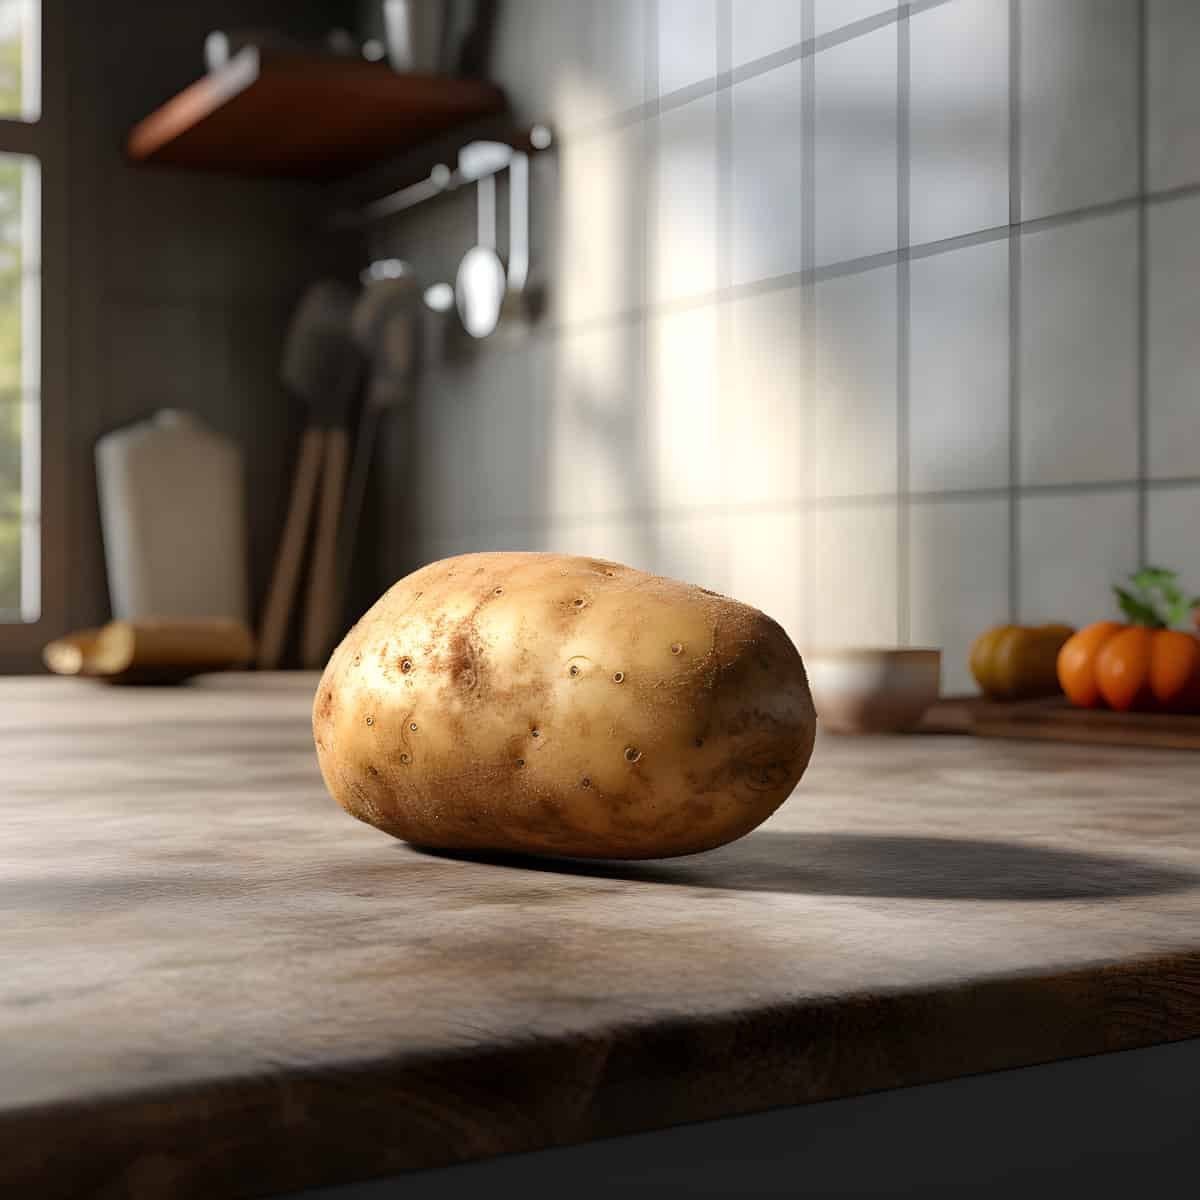 Hela Potatoes on a kitchen counter